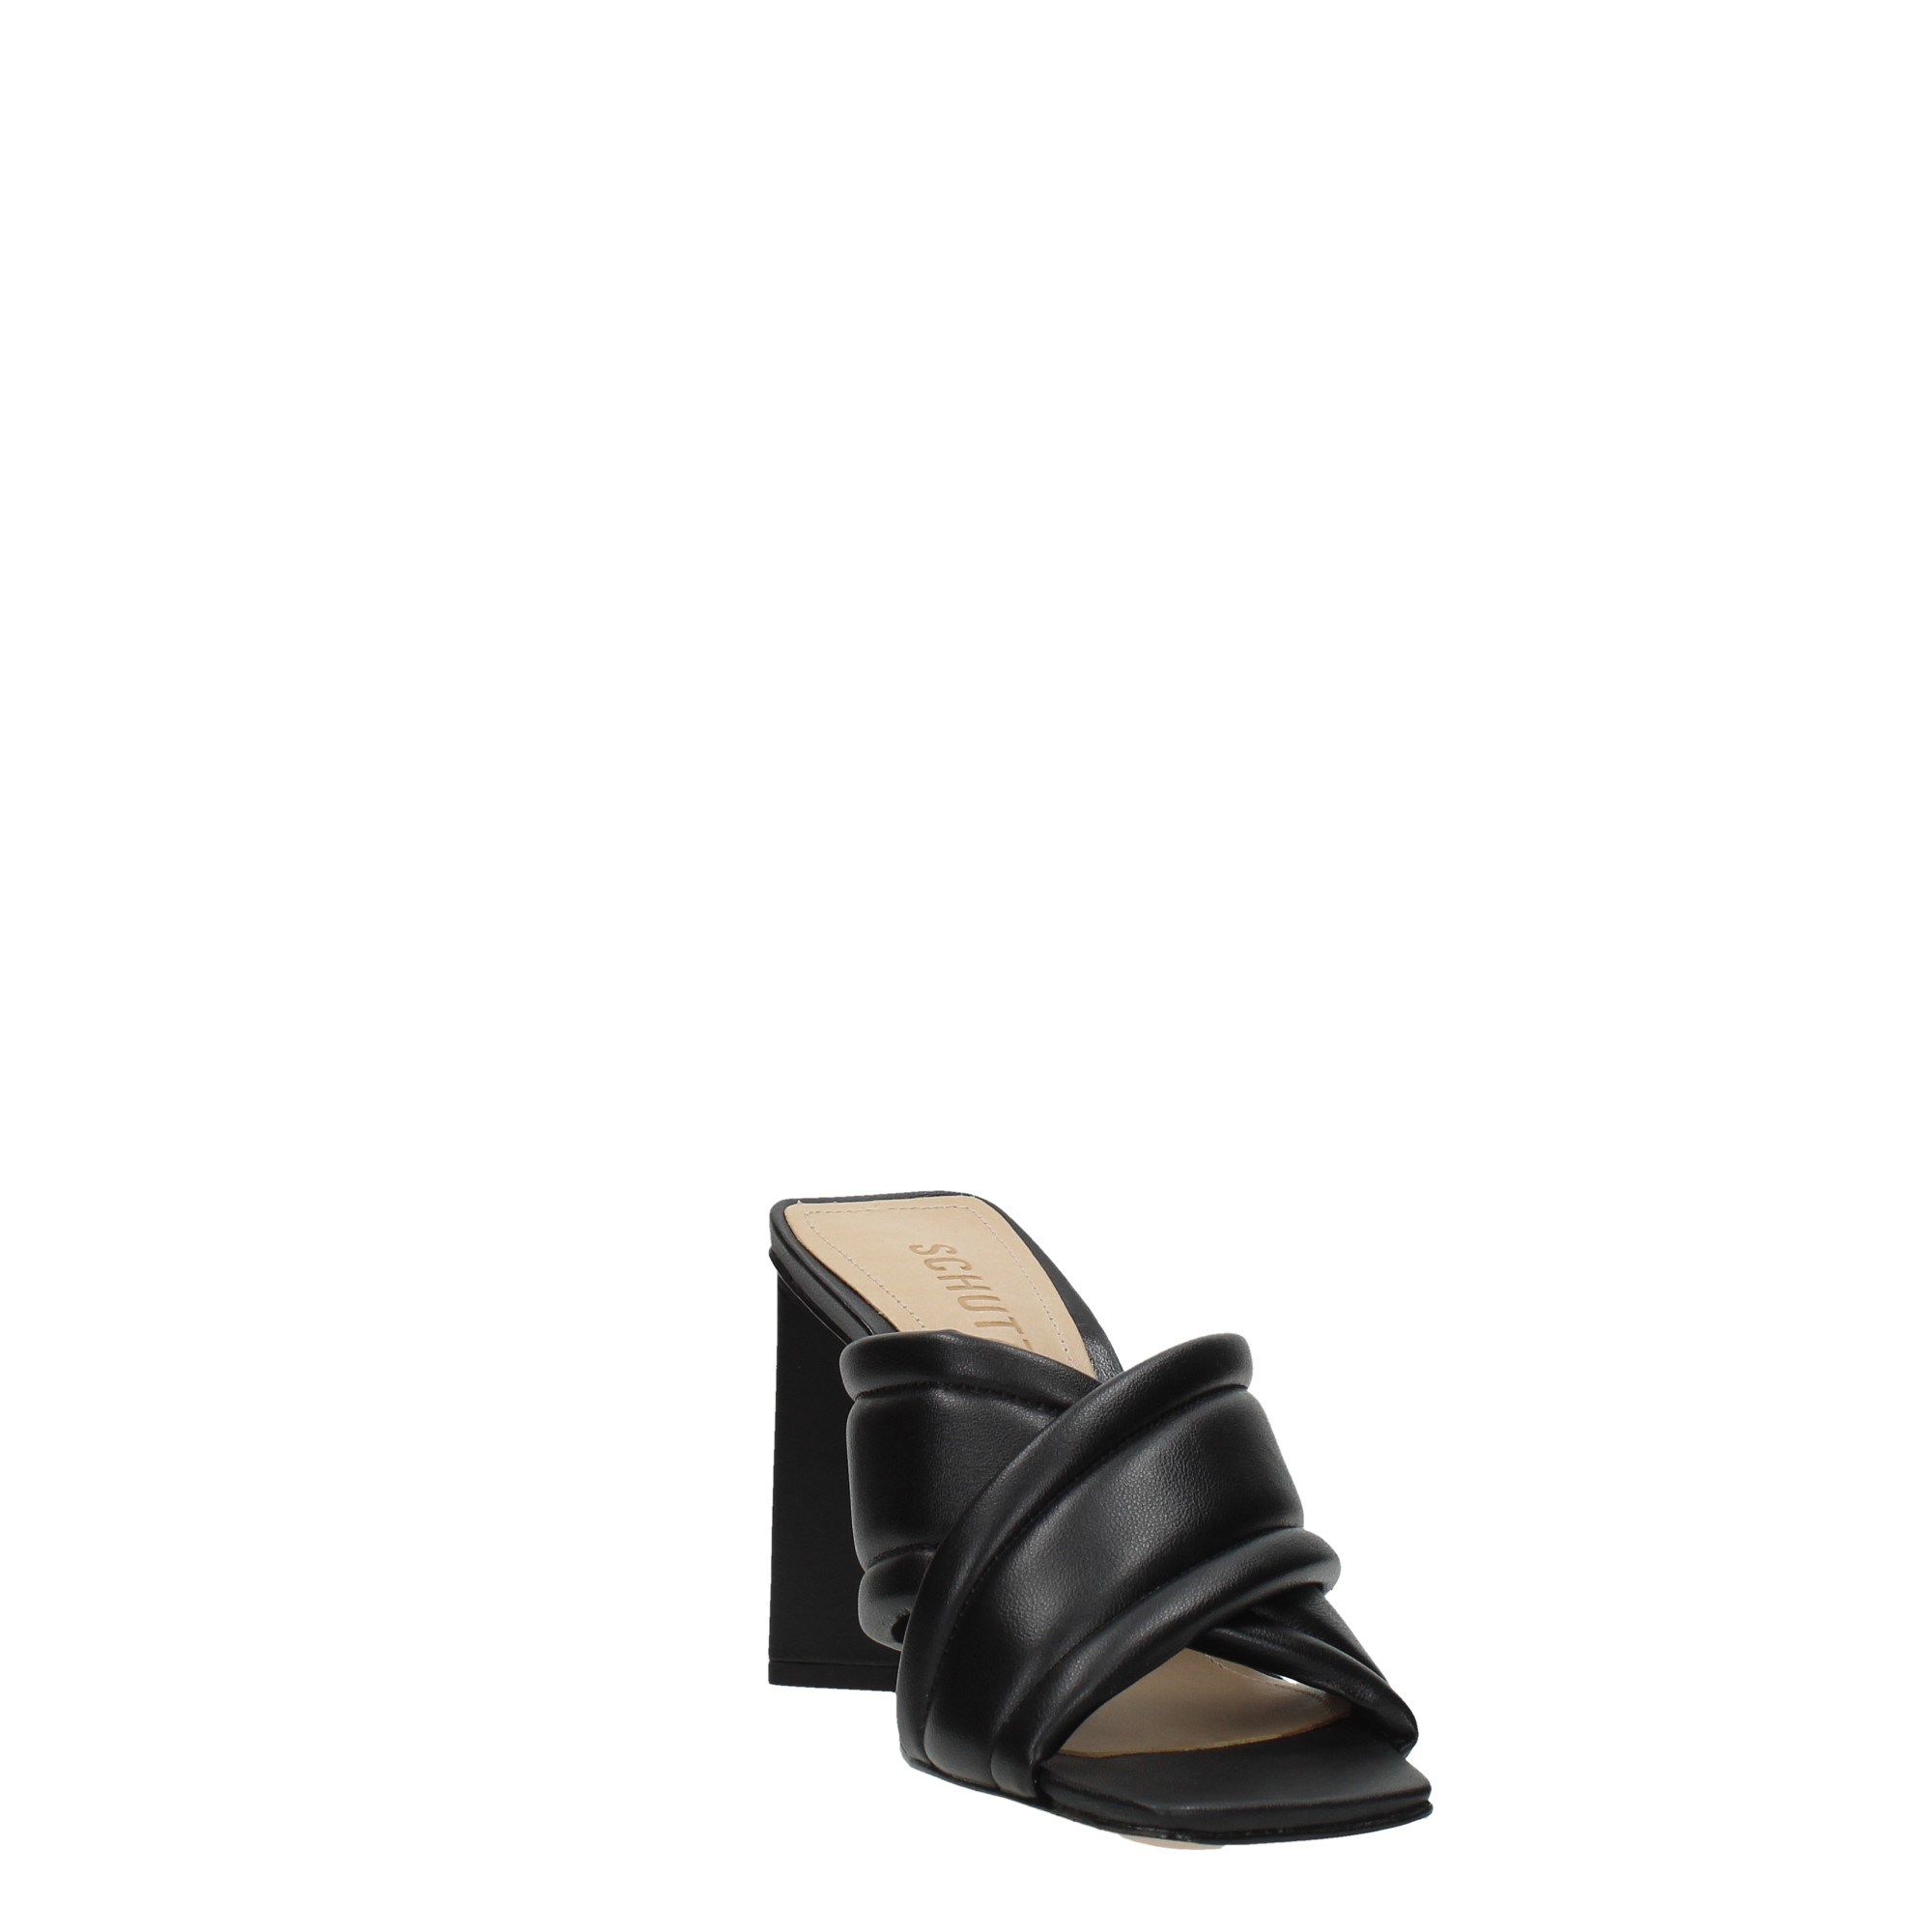 Schutz Shoes Women Sandals S212600004